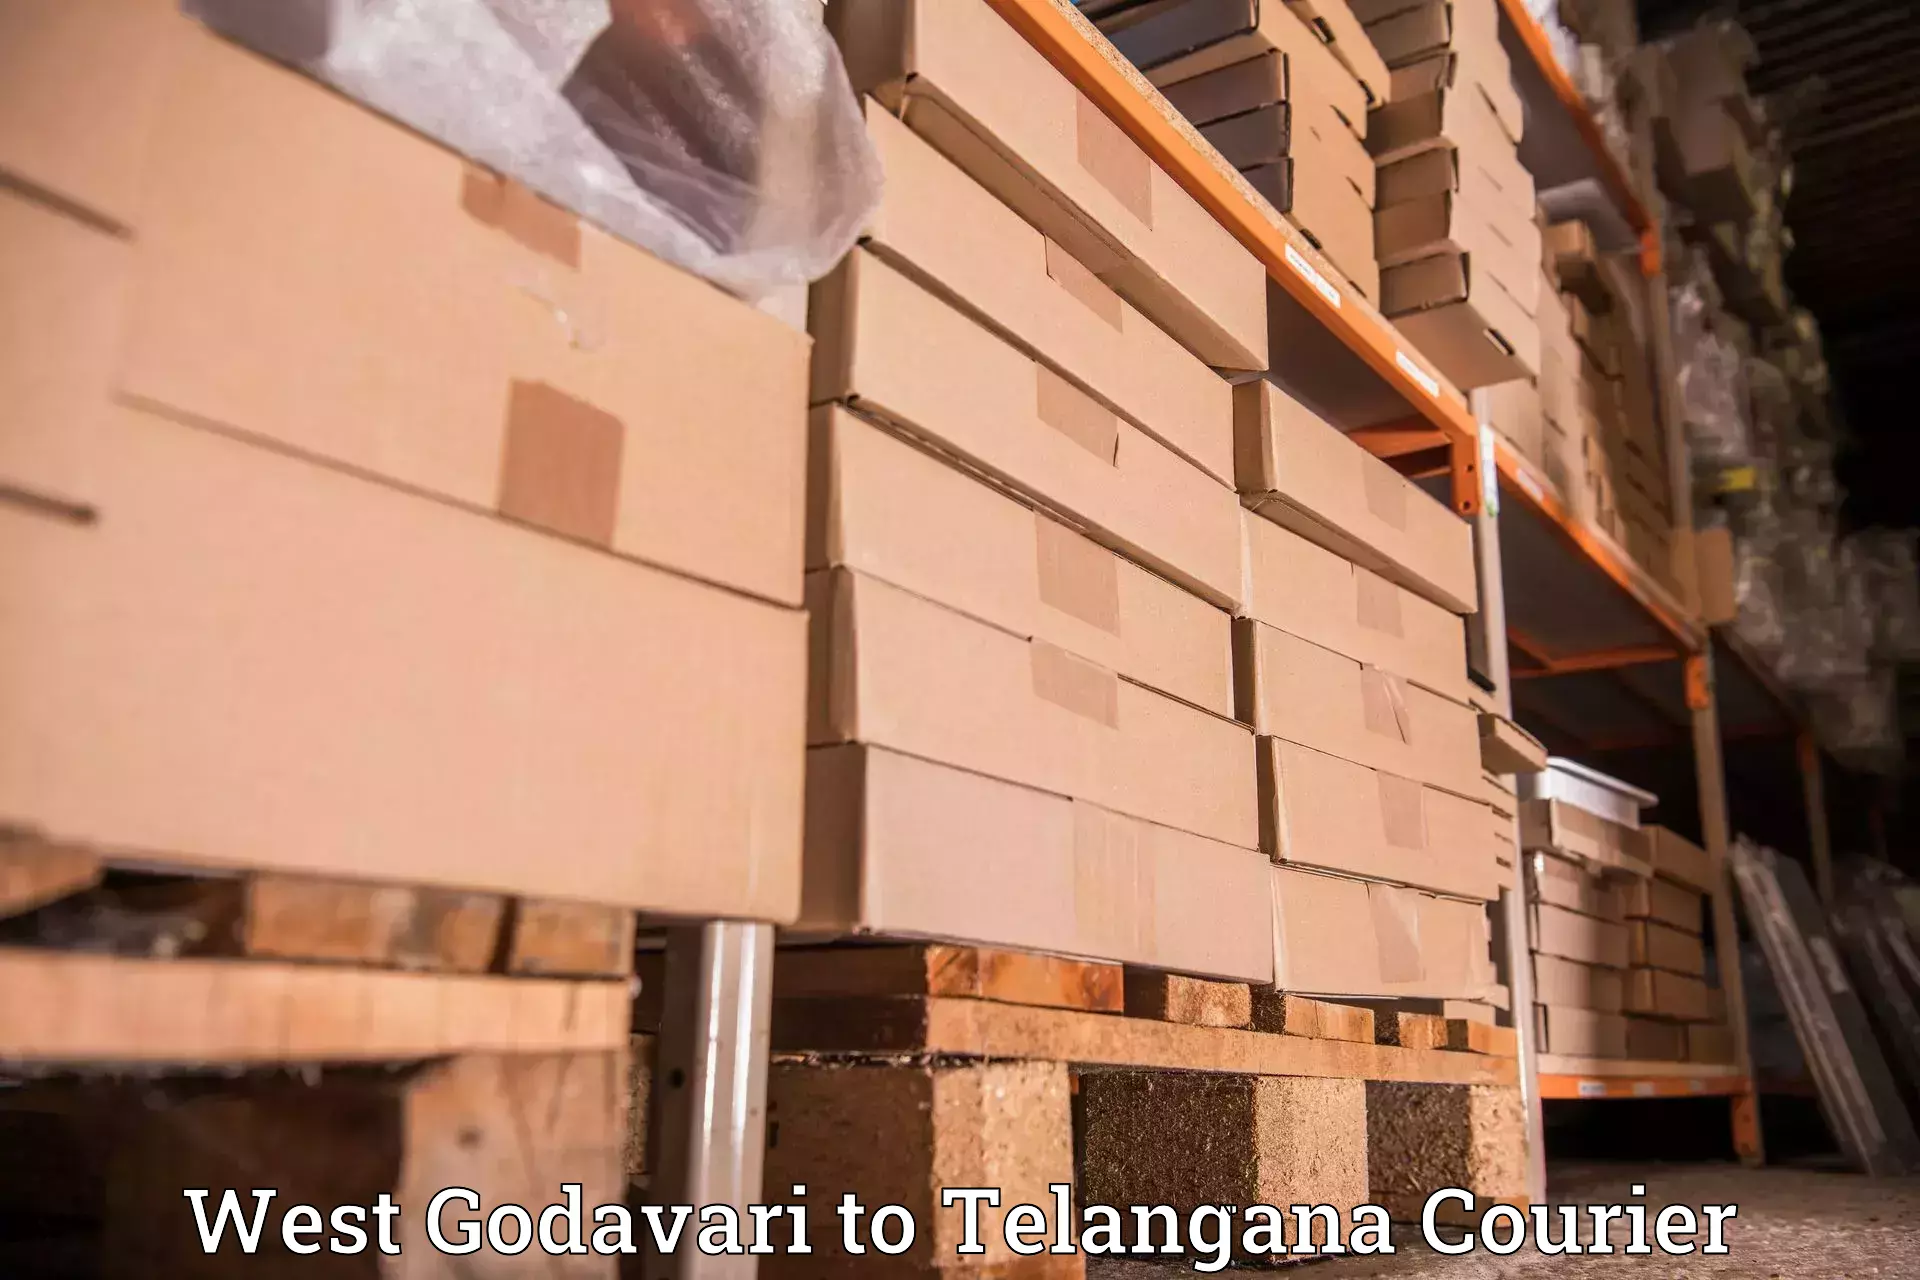 Courier service efficiency West Godavari to Telangana